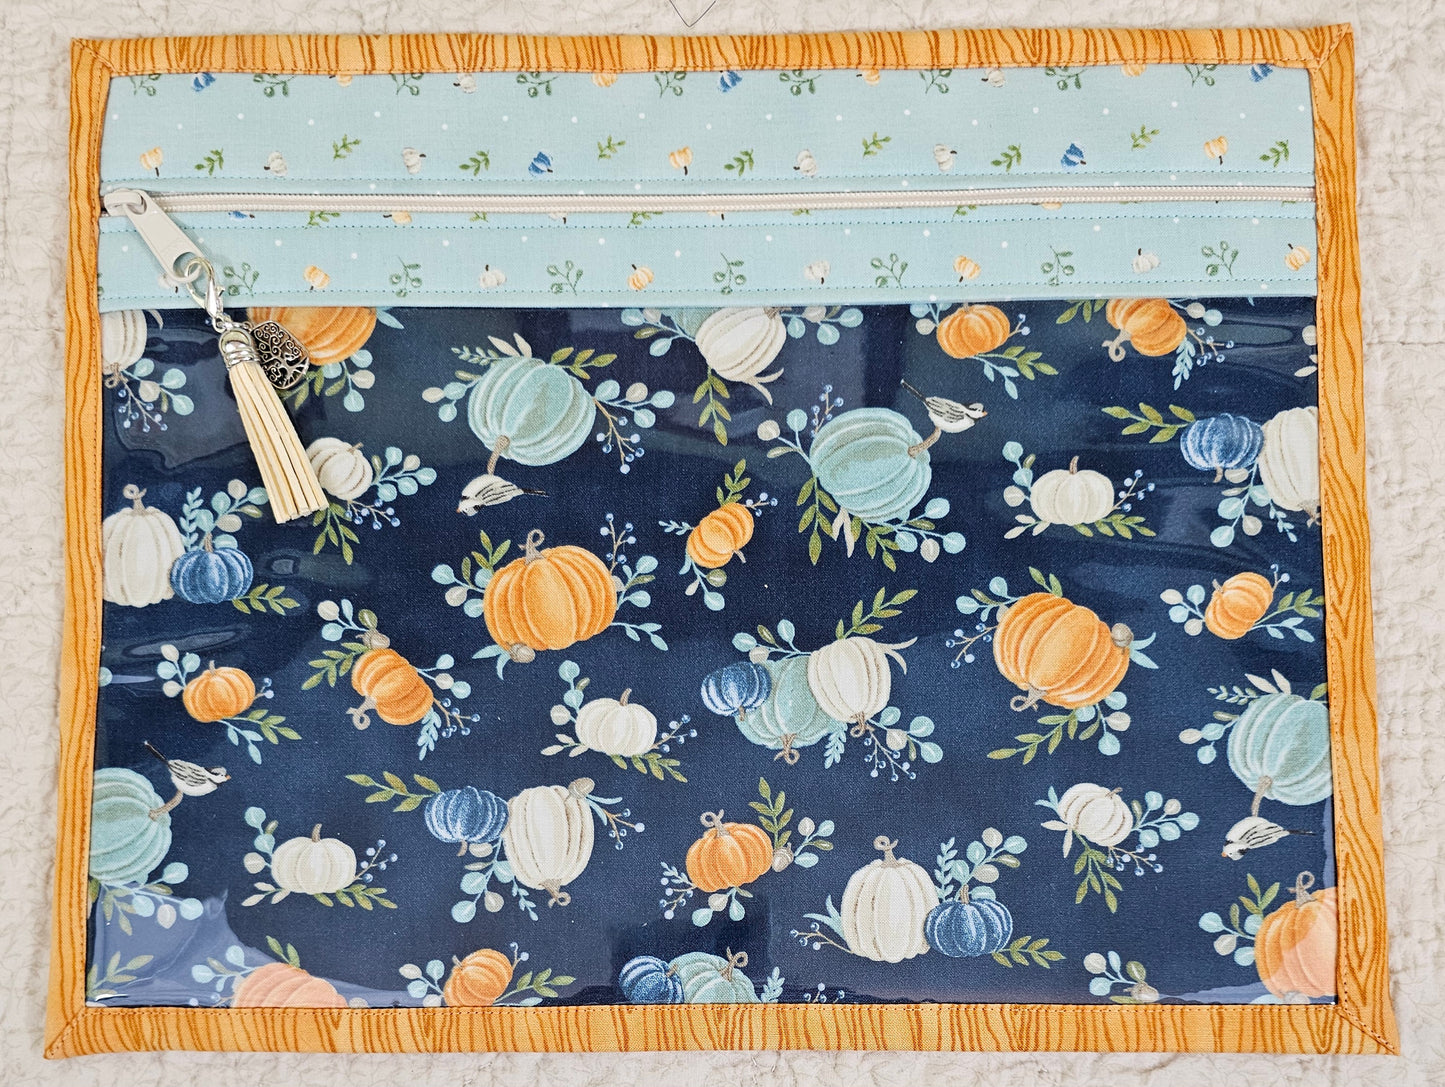 11" x 14" Project Bag - Pumpkins on blue fabric with light blue trim